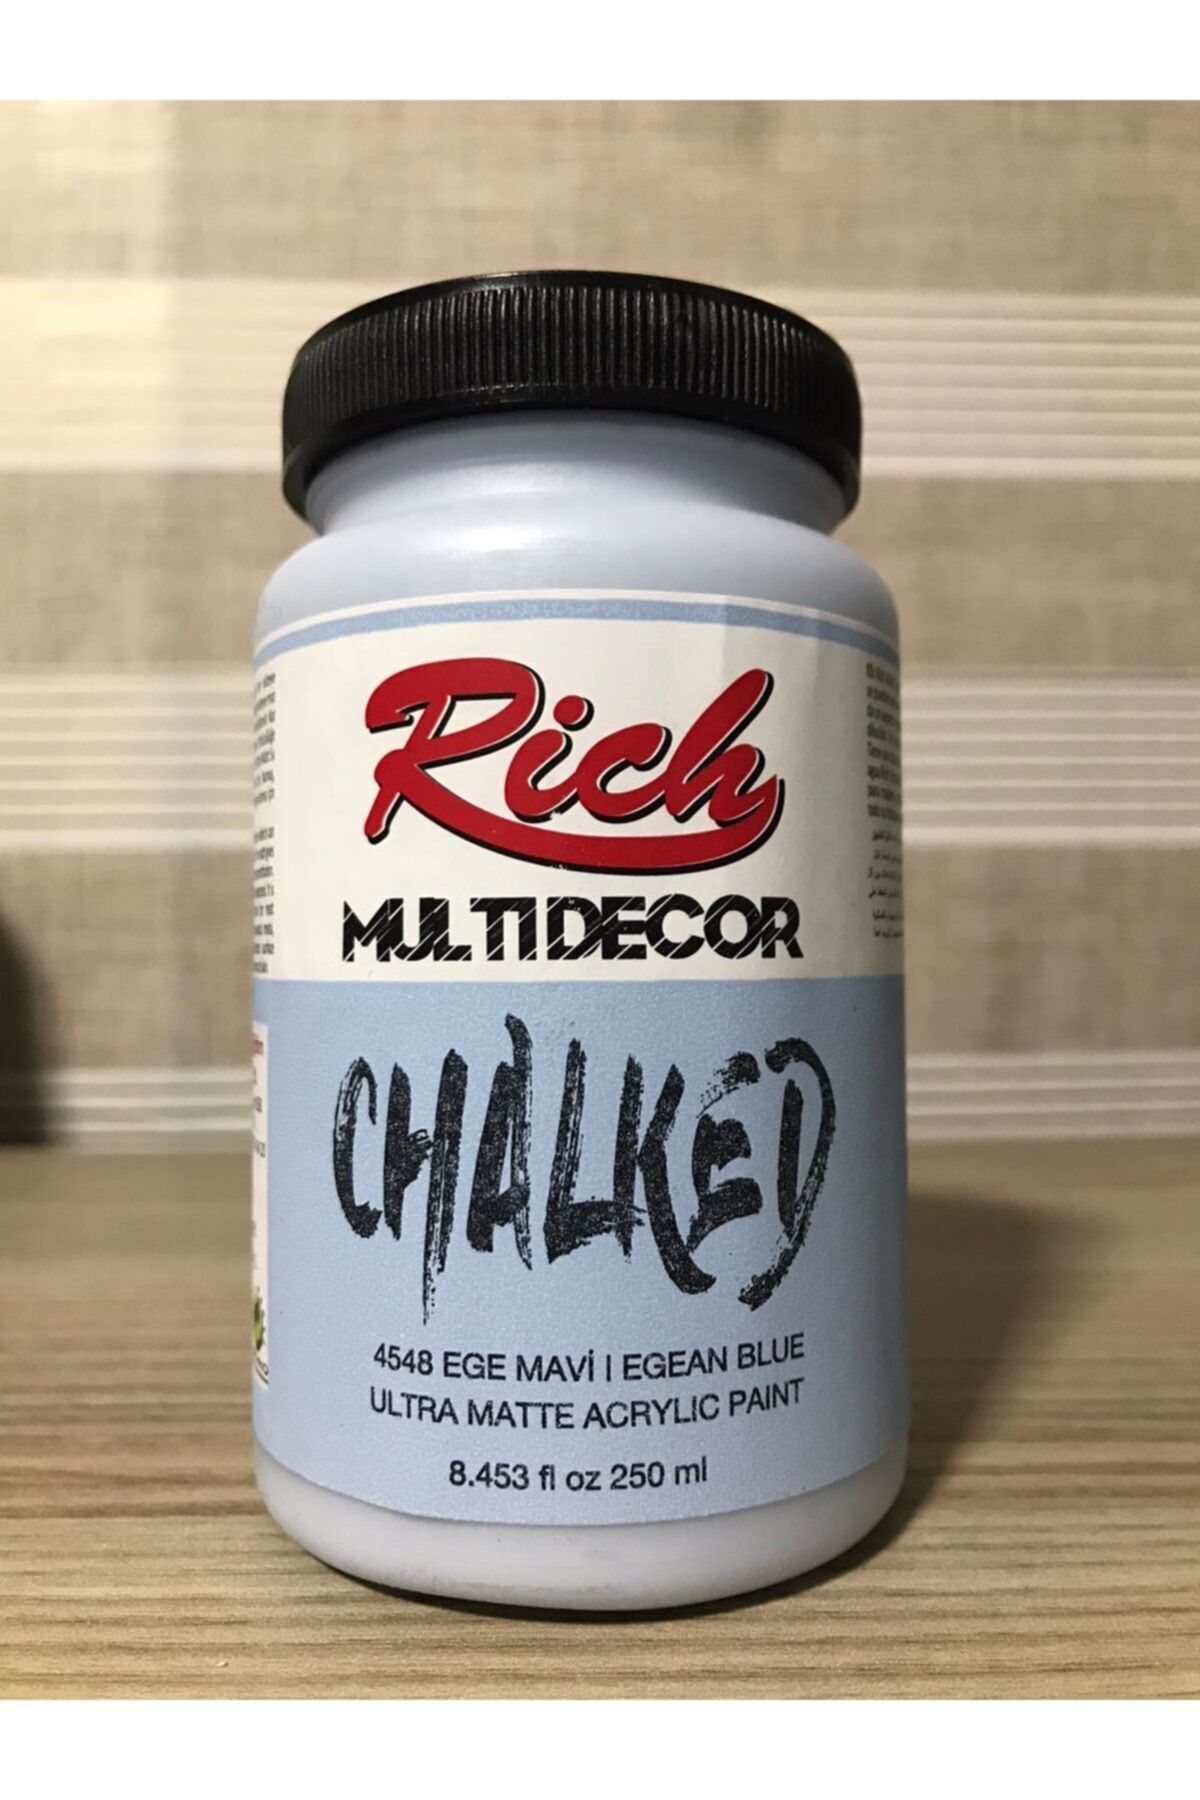 Rich Multidecor Chalked 250ml Ege Mavi